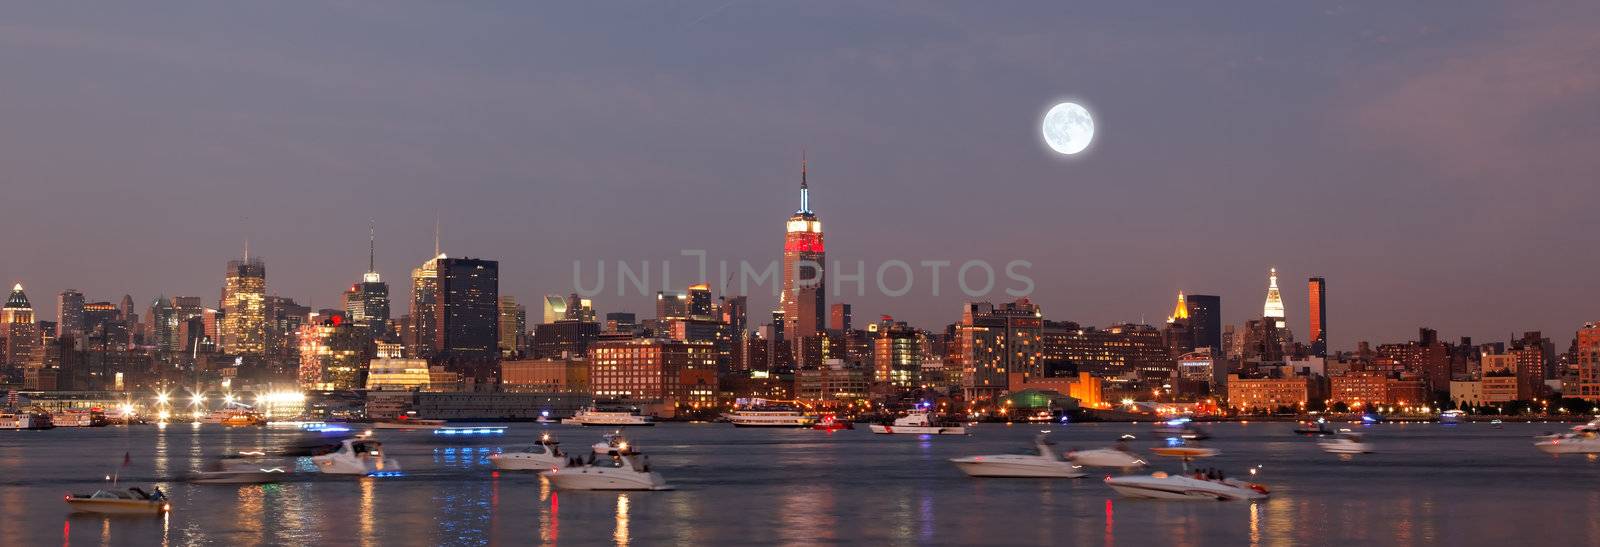 The Mid-town Manhattan Skyline by gary718